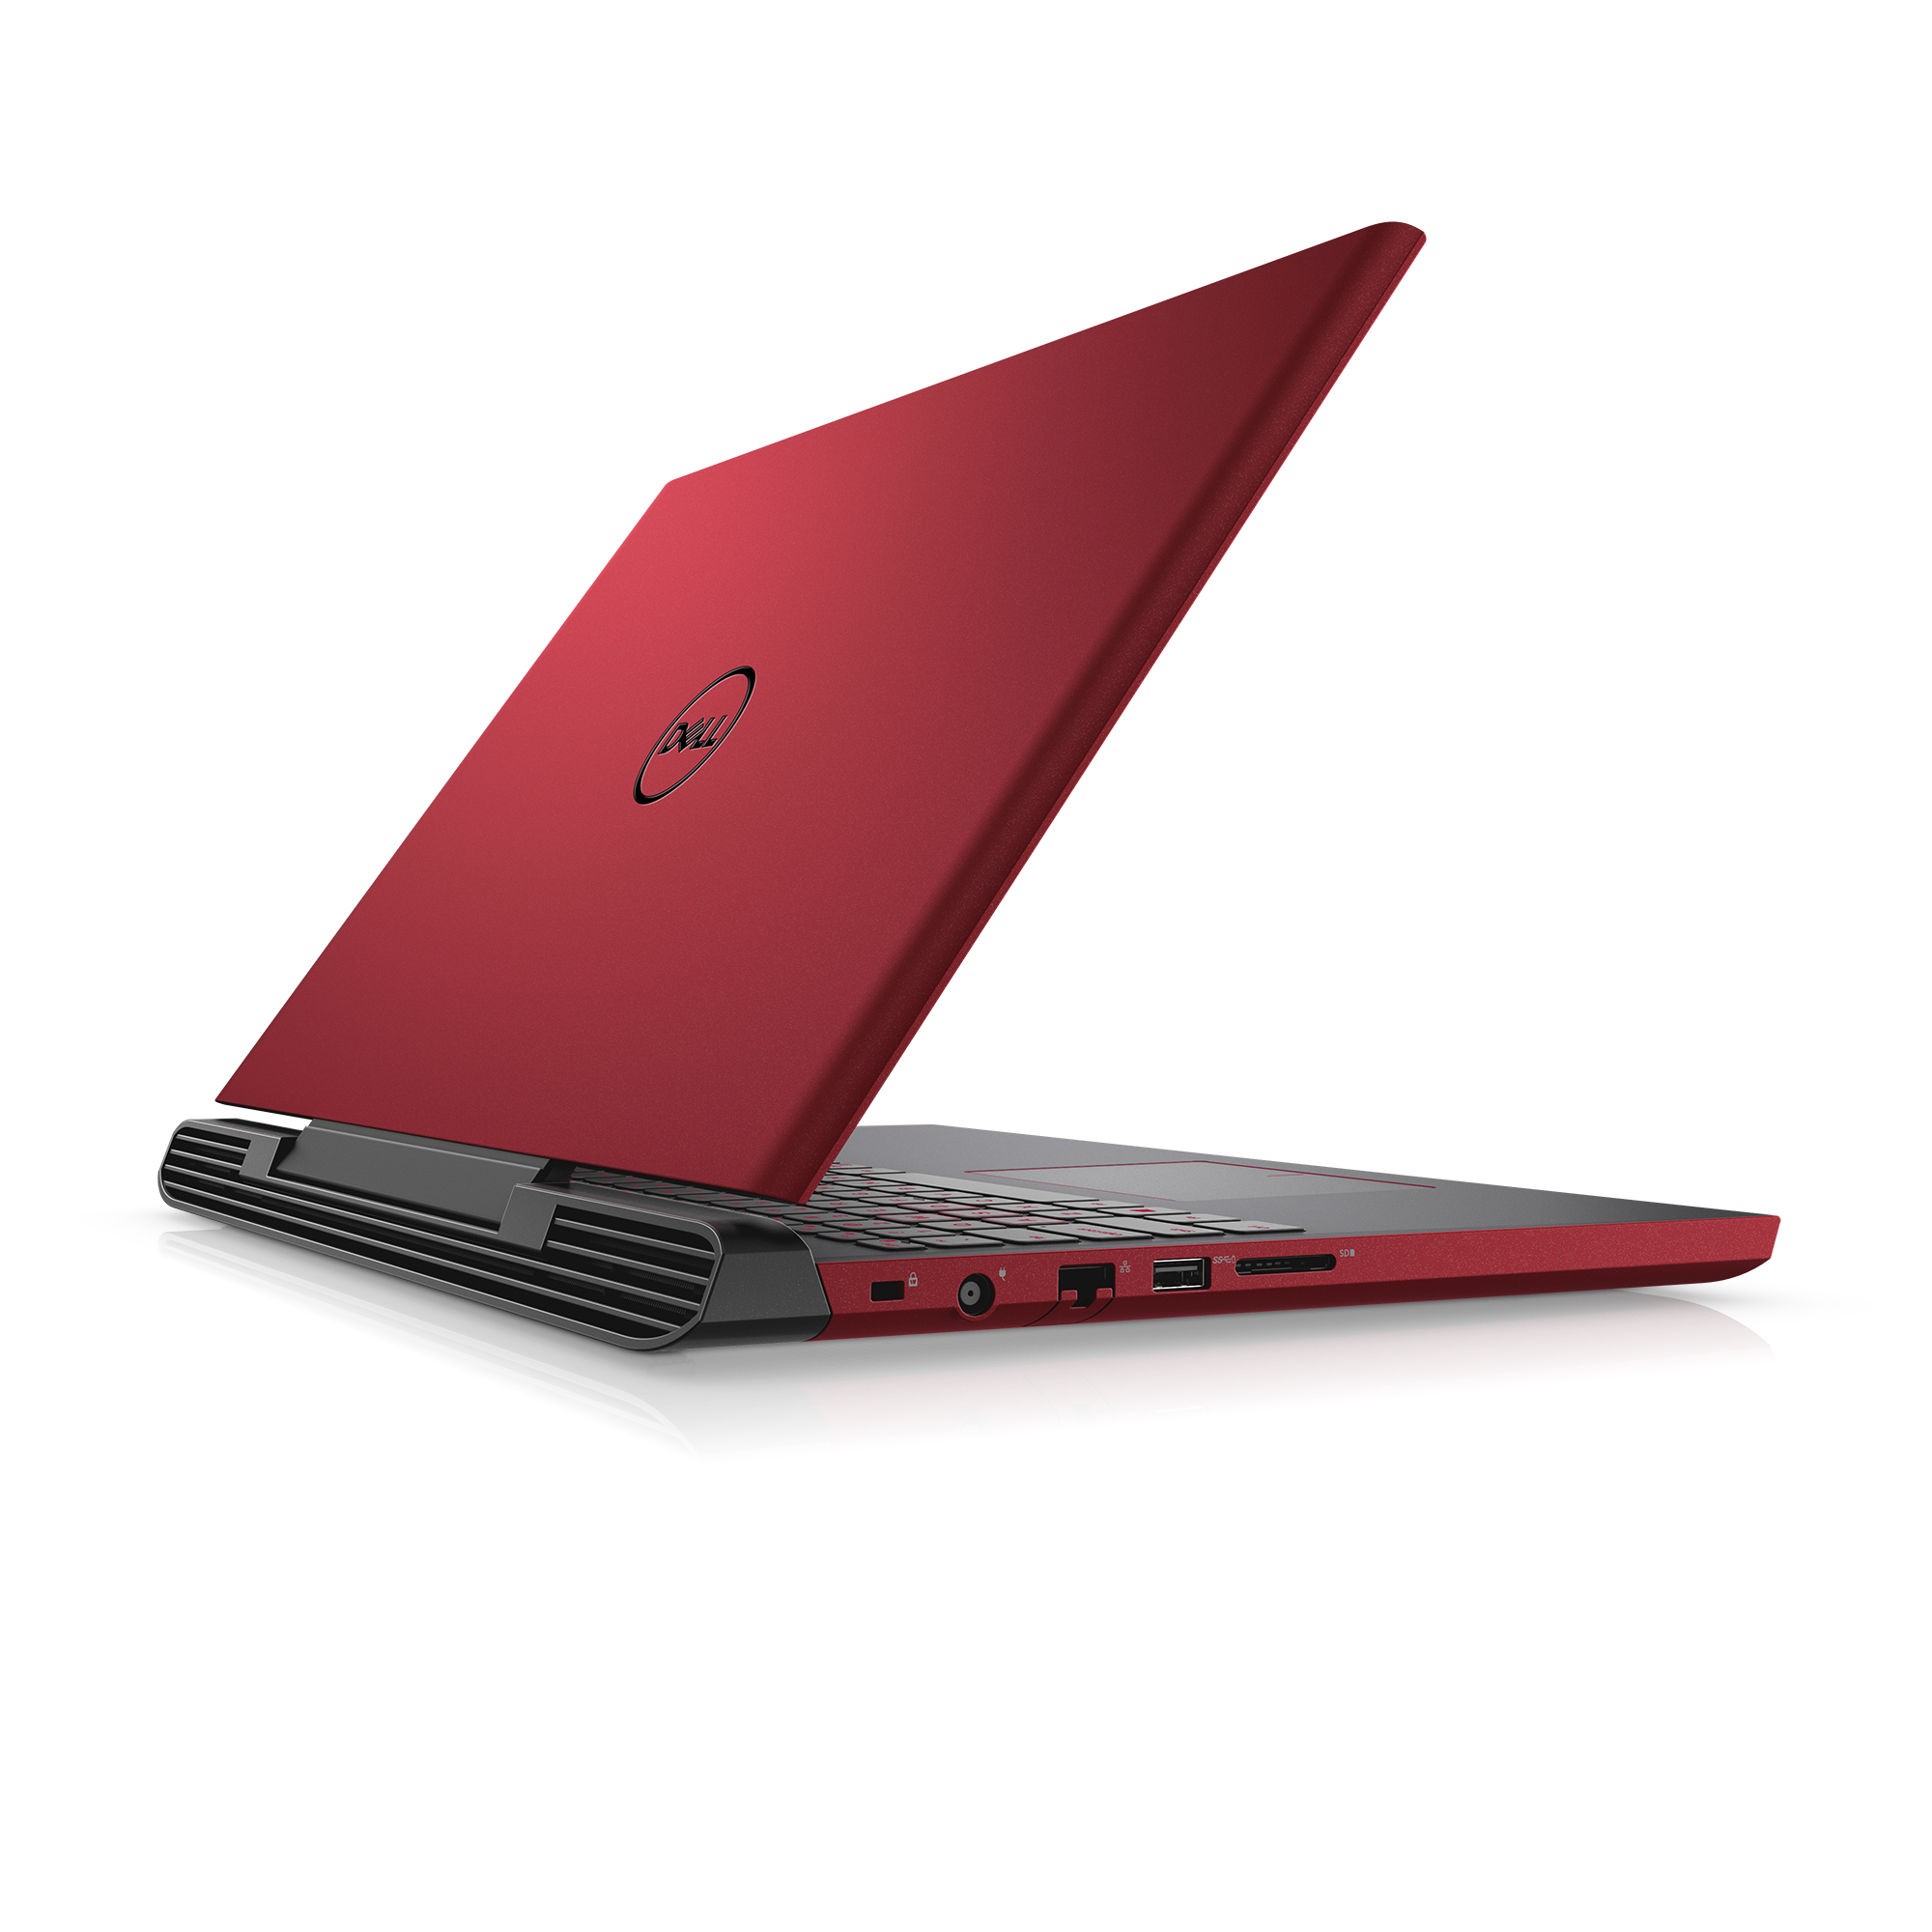 Dell G5 Gaming Laptop 15.6" Full HD, Intel Core i5-8300H, NVIDIA GeForce GTX 1060 6GB, 256GB SSD + 1TB Storage, 16GB RAM, G5587-5559RED - image 3 of 3